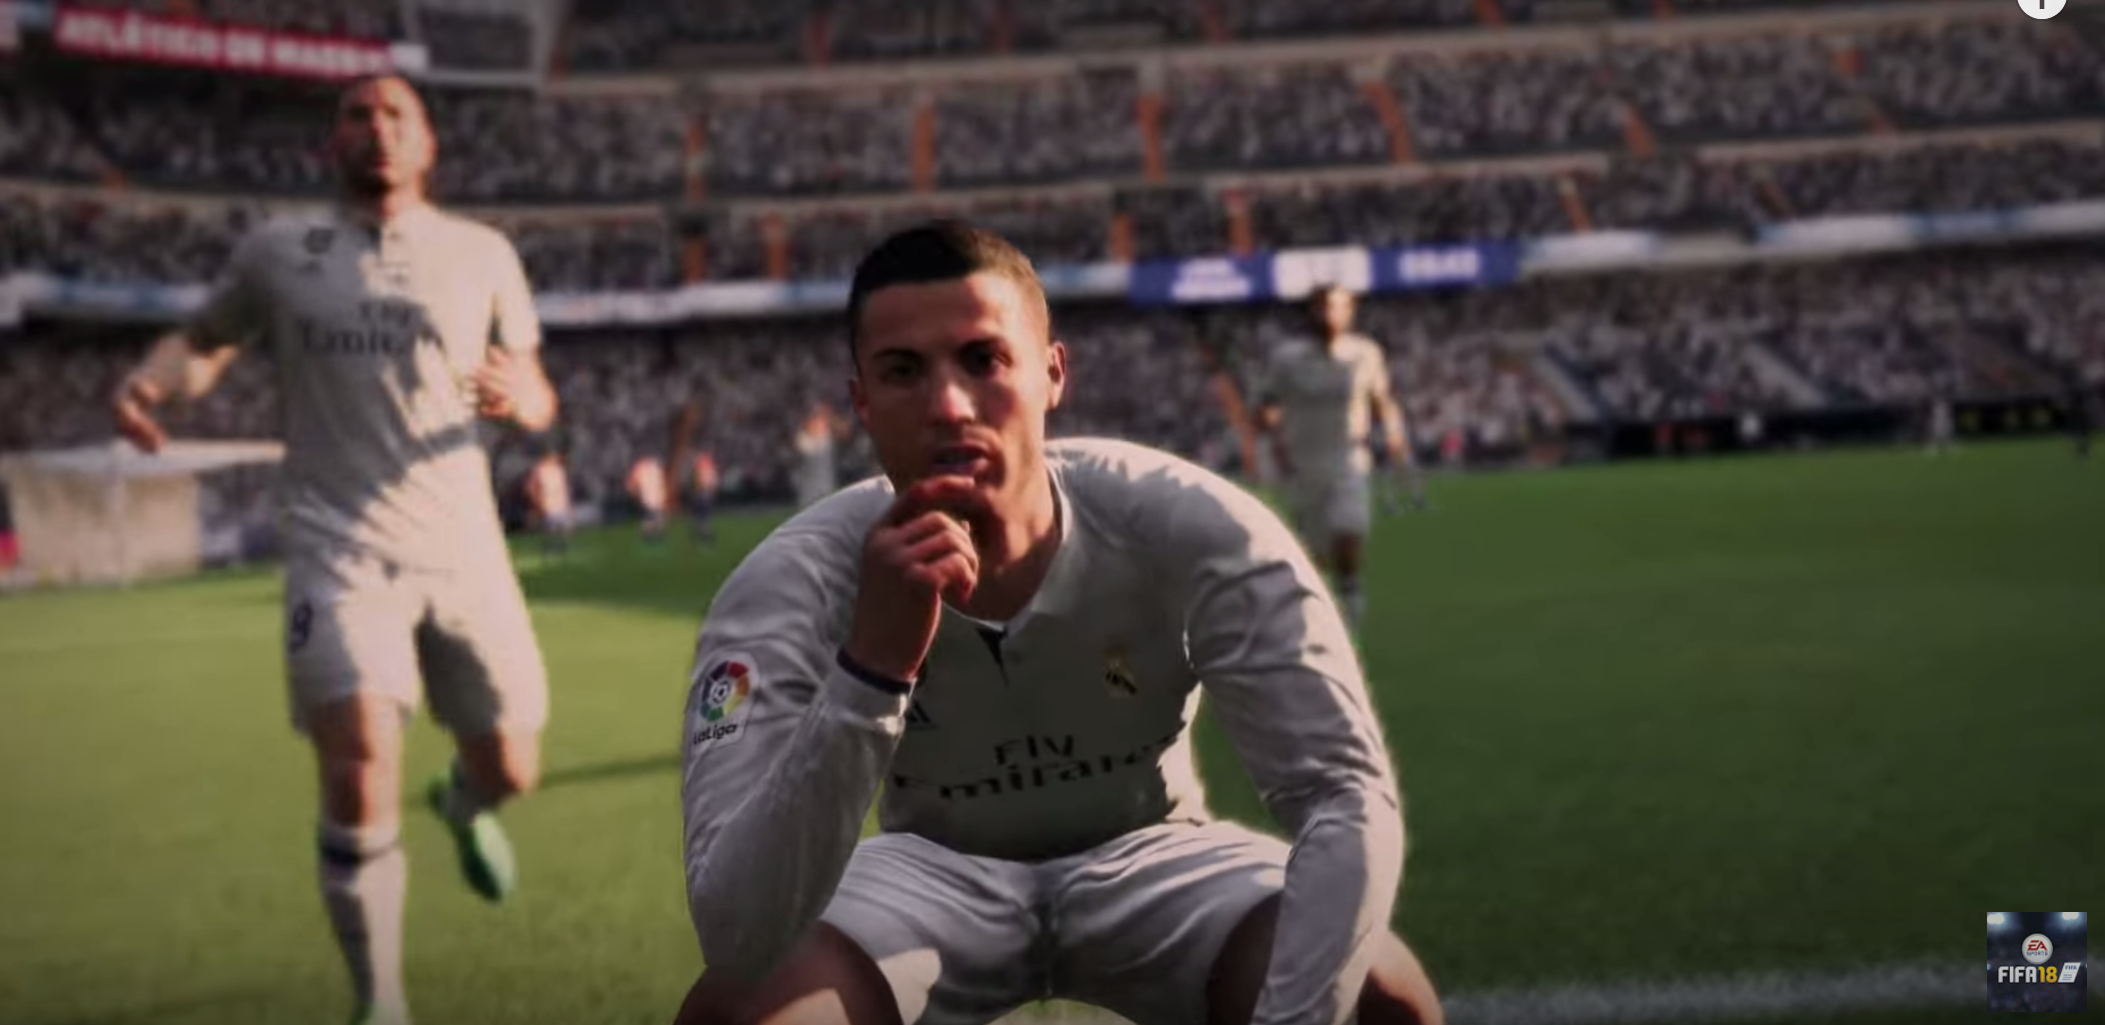 The Fifa Gameplay Trailer Featuring Cristiano Ronaldo